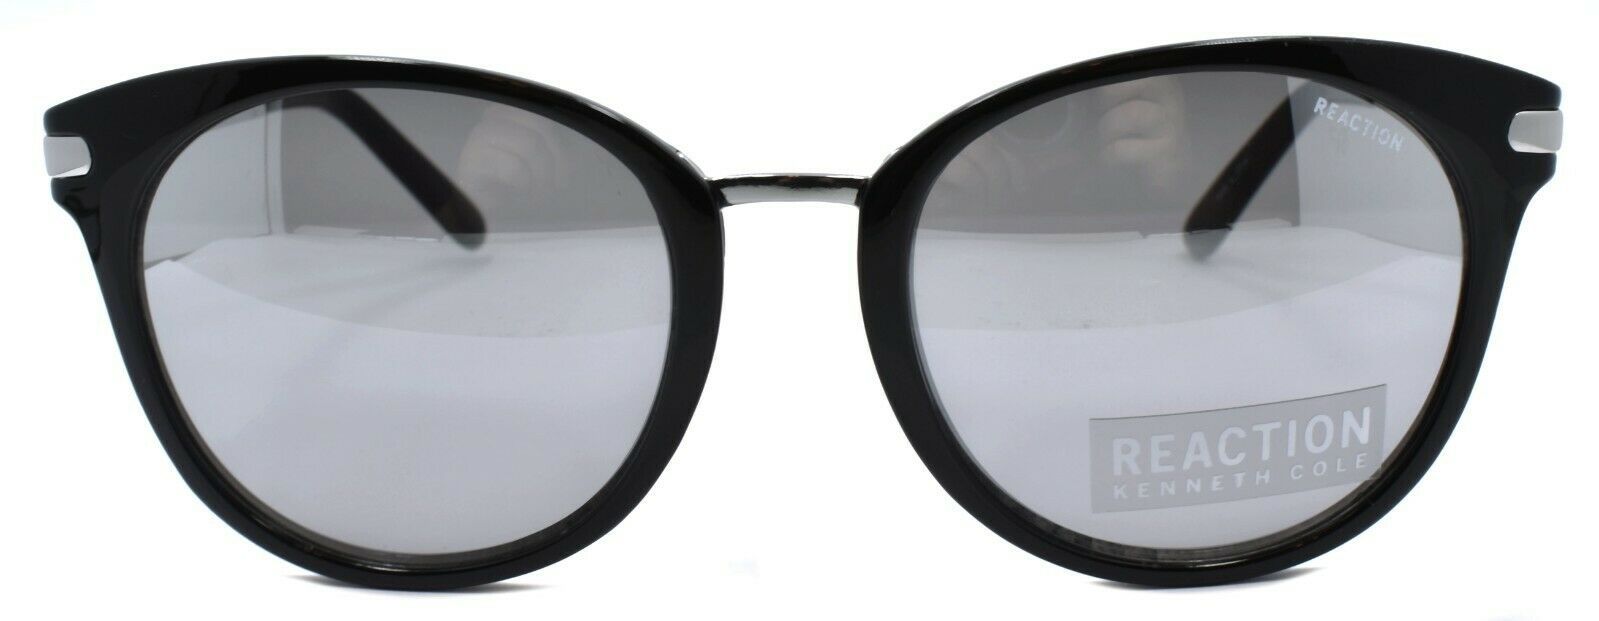 2-Kenneth Cole Reaction KC1309 01C Men's Sunglasses Black & Silver / Mirrored-664689980642-IKSpecs